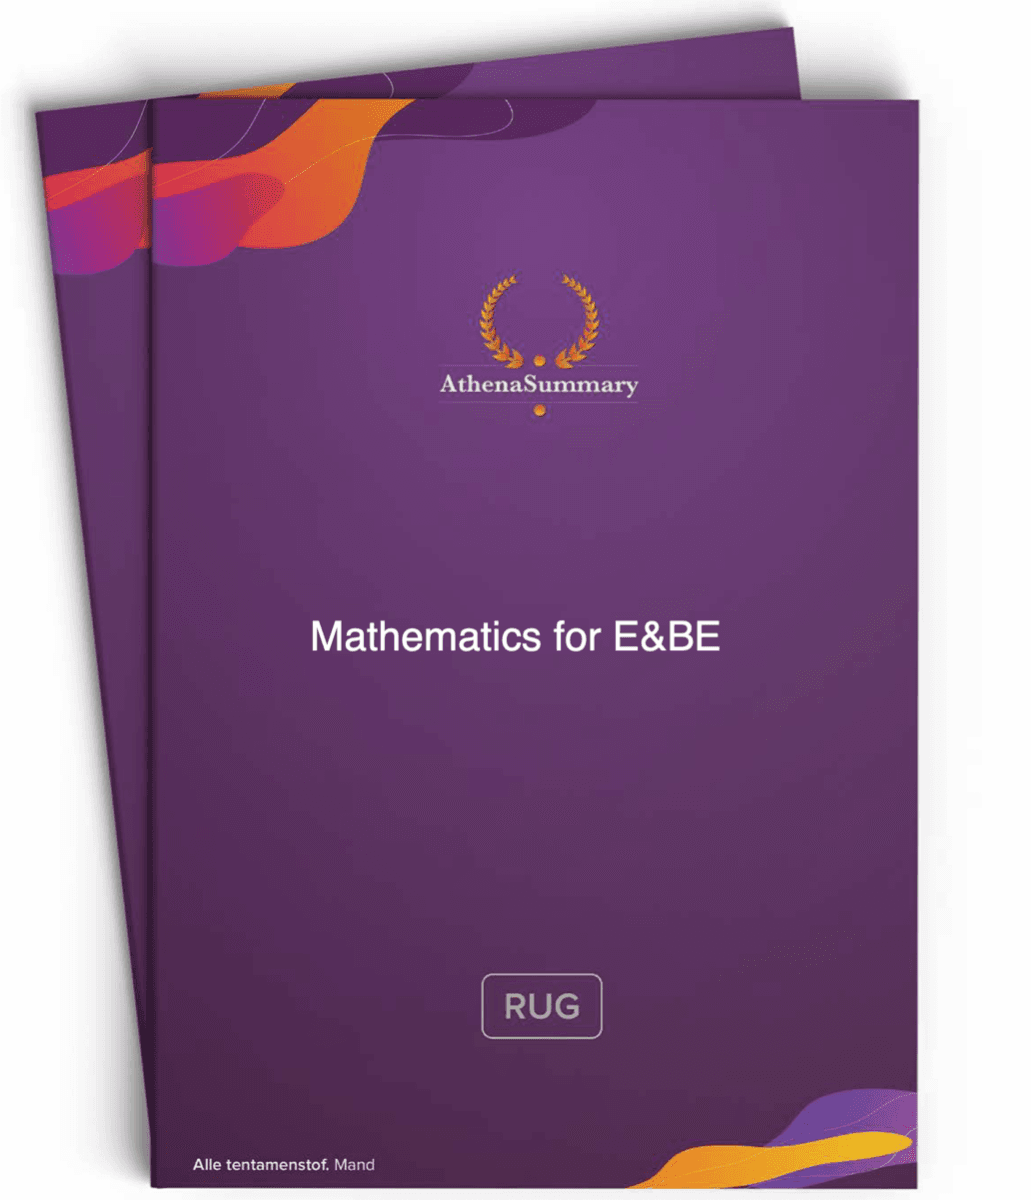 Mathematics for E&BE